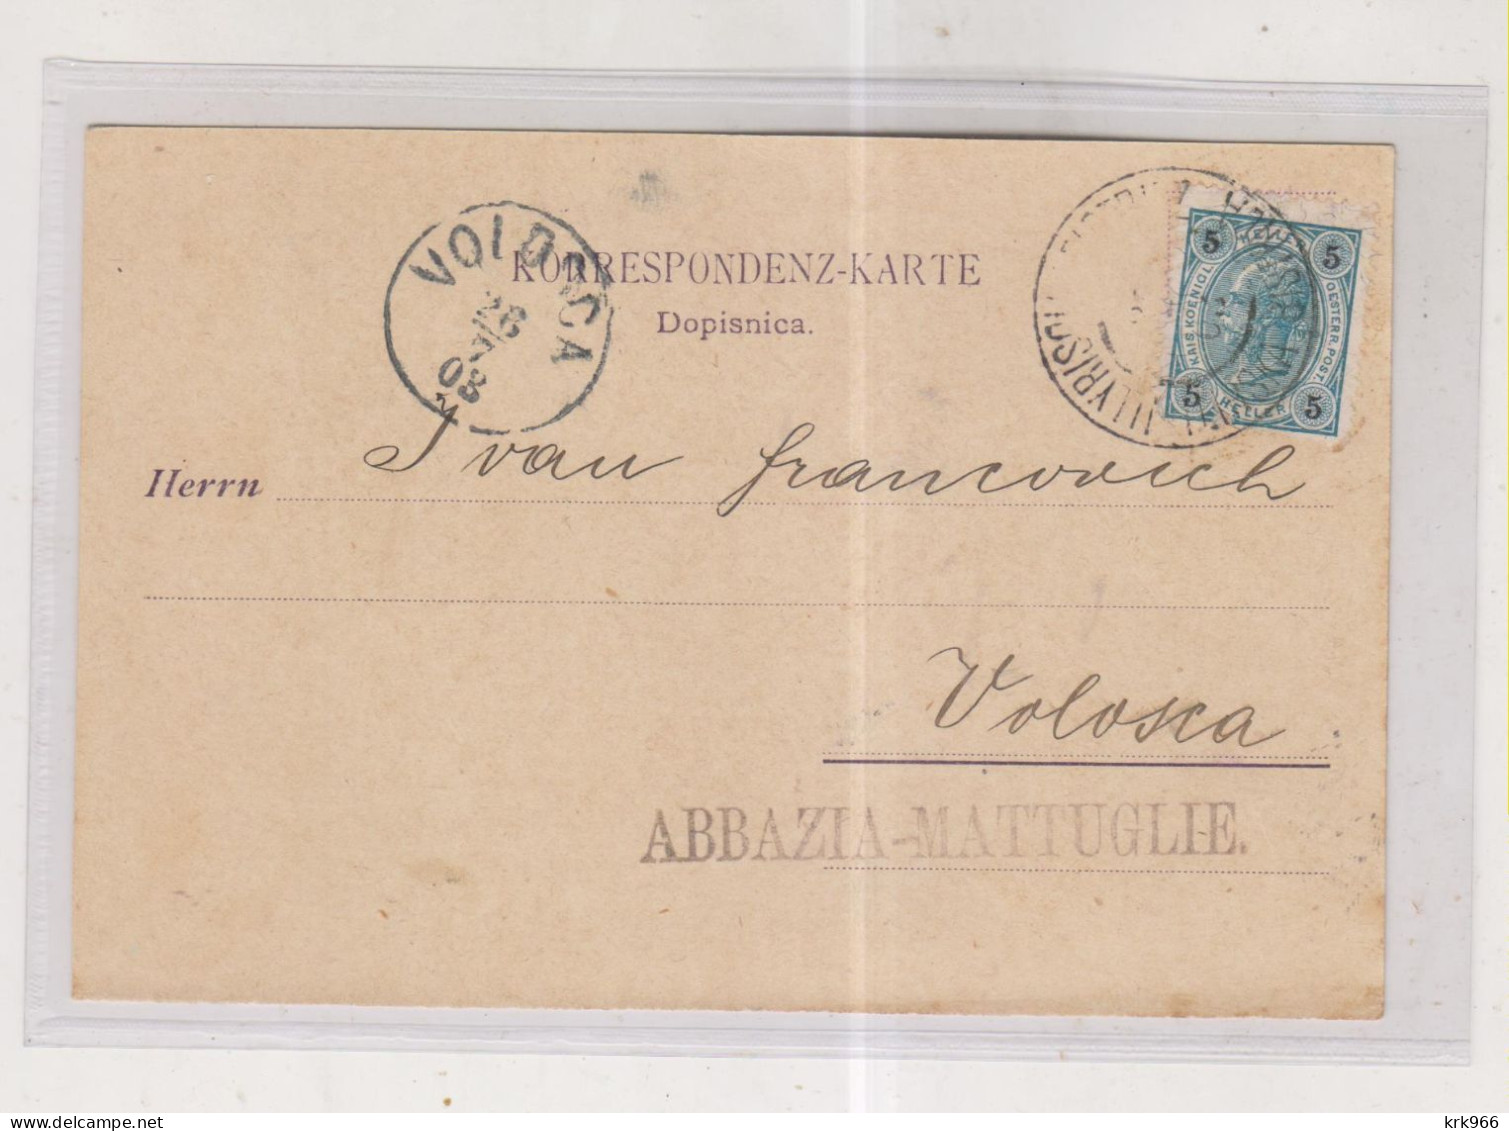 SLOVENIA AUSTRIA 1903 ILIRSKA BISTRICA Nice Postcard To Volosca Volosko Croatia - Slovenië